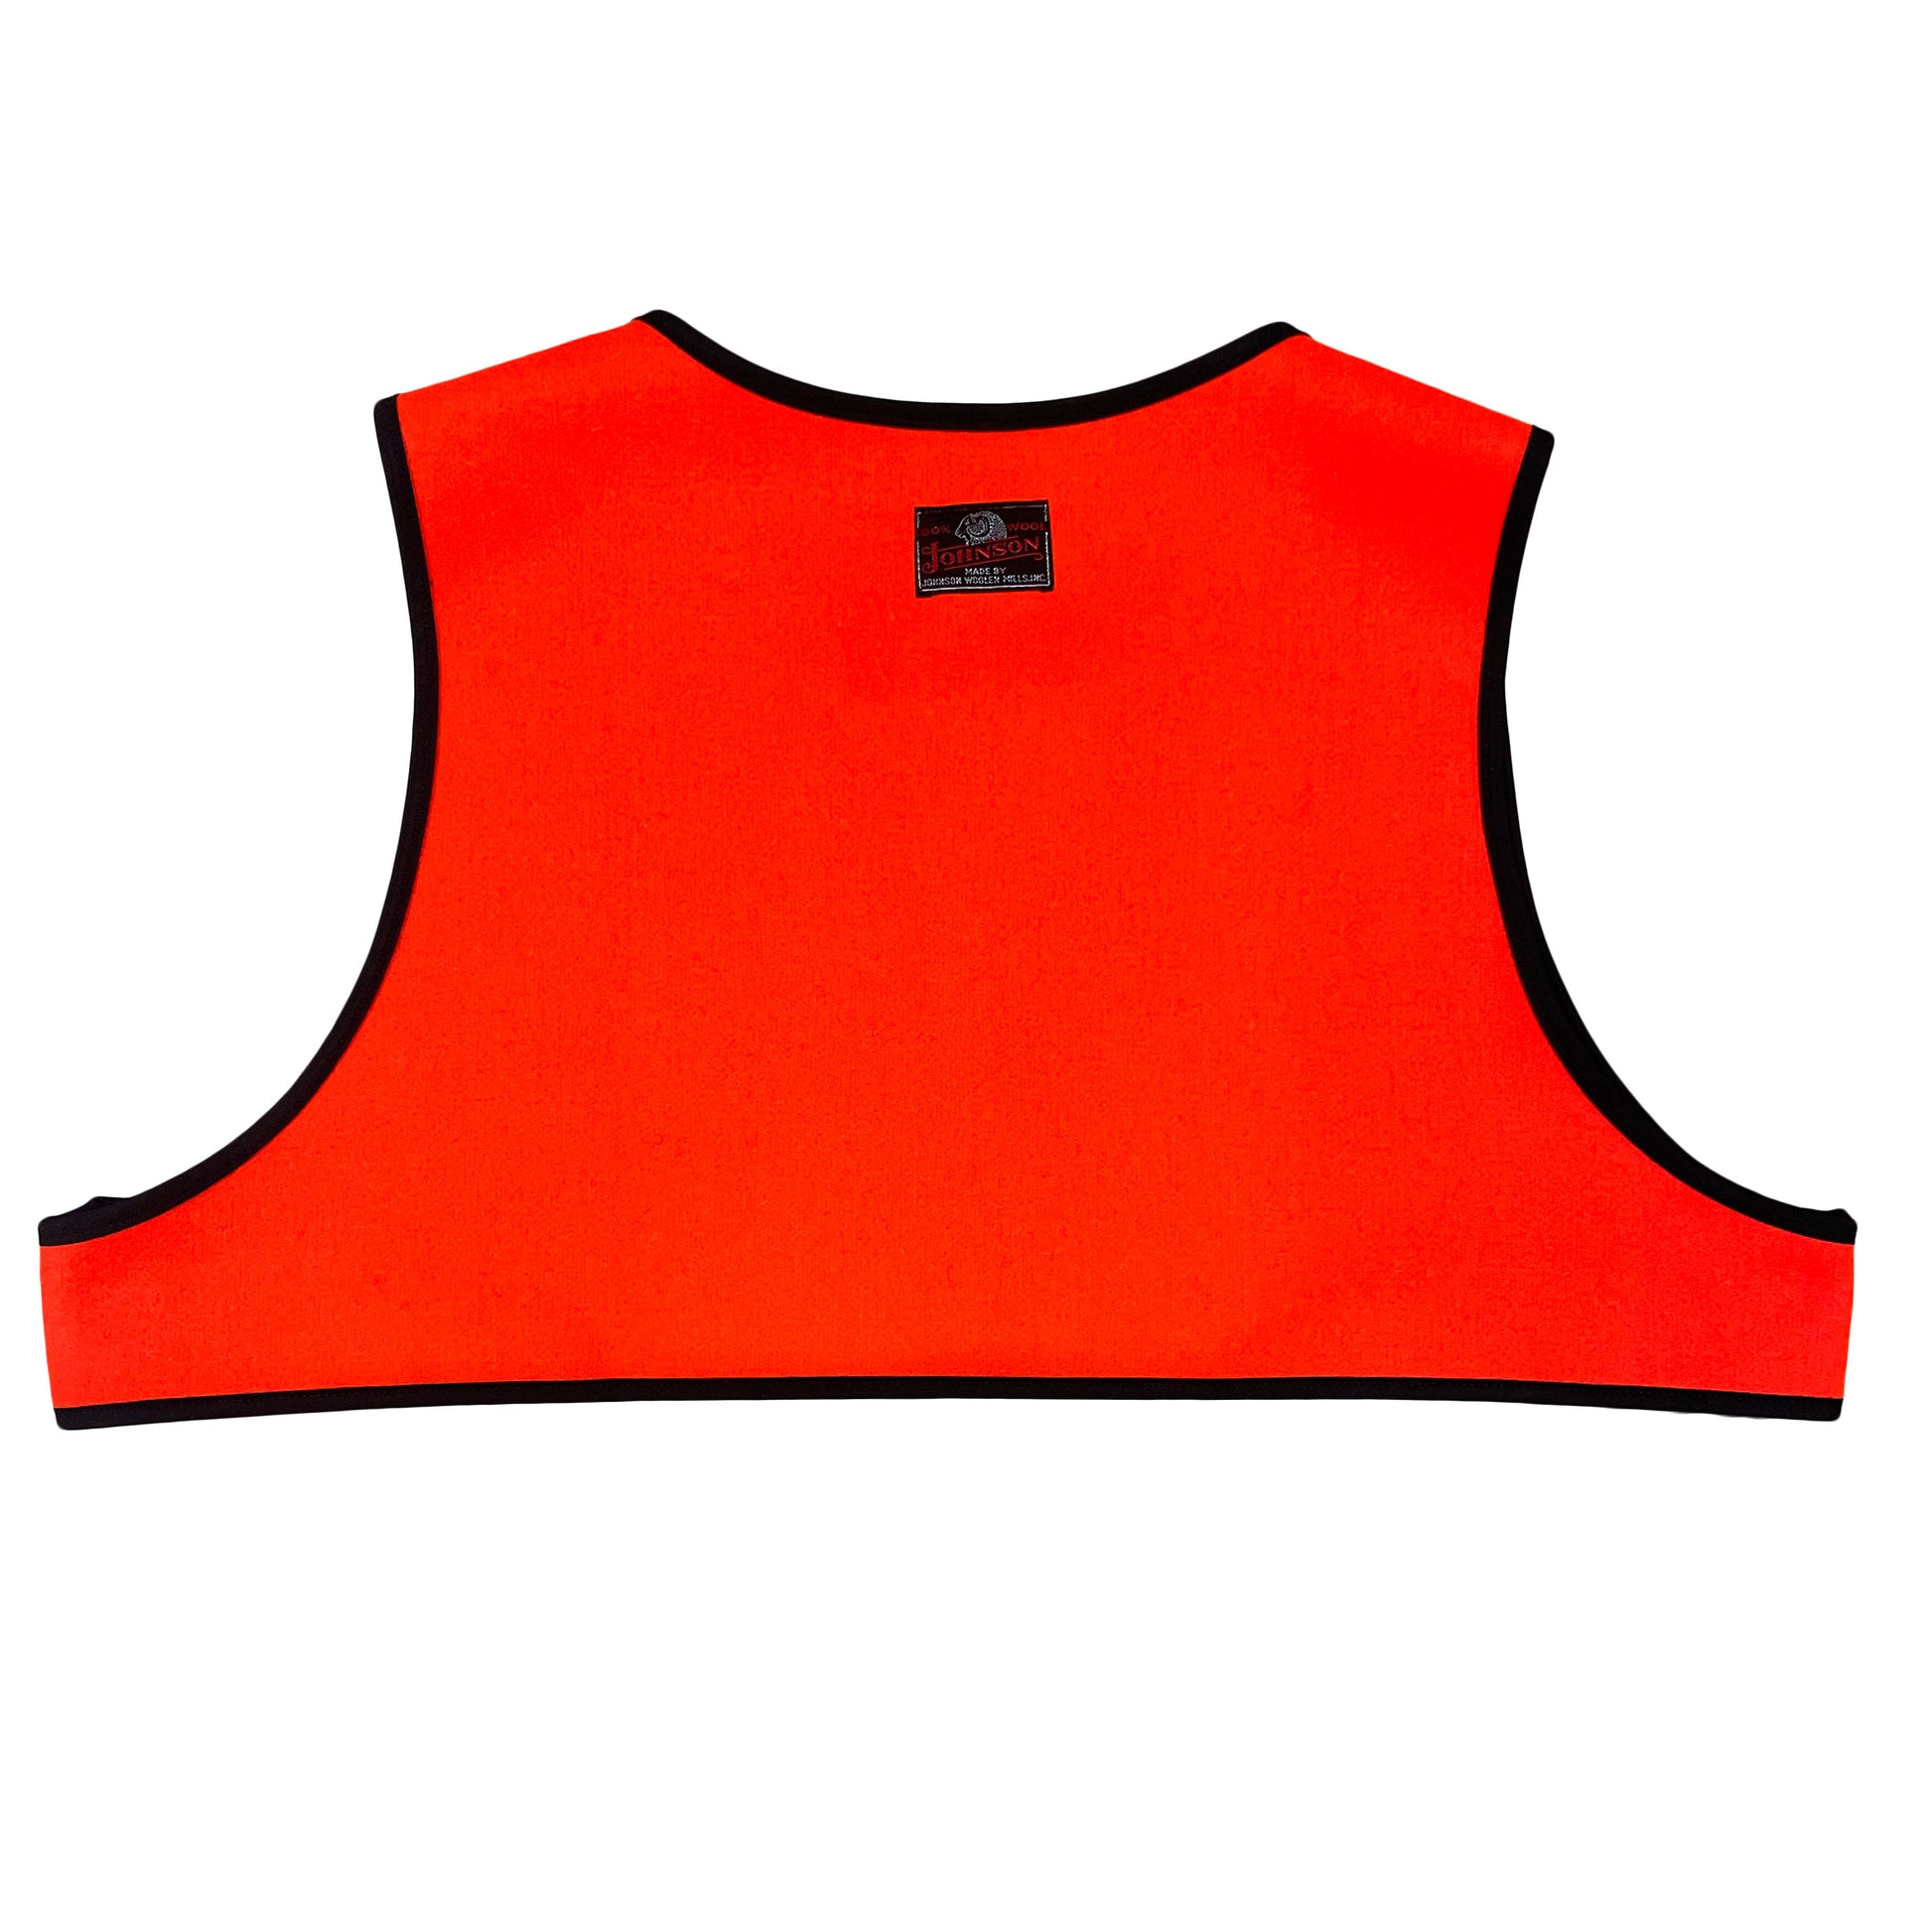 Back side Blaze orange 100% wool safety cape. Johnson Woolen Mills tag on top center of cape 